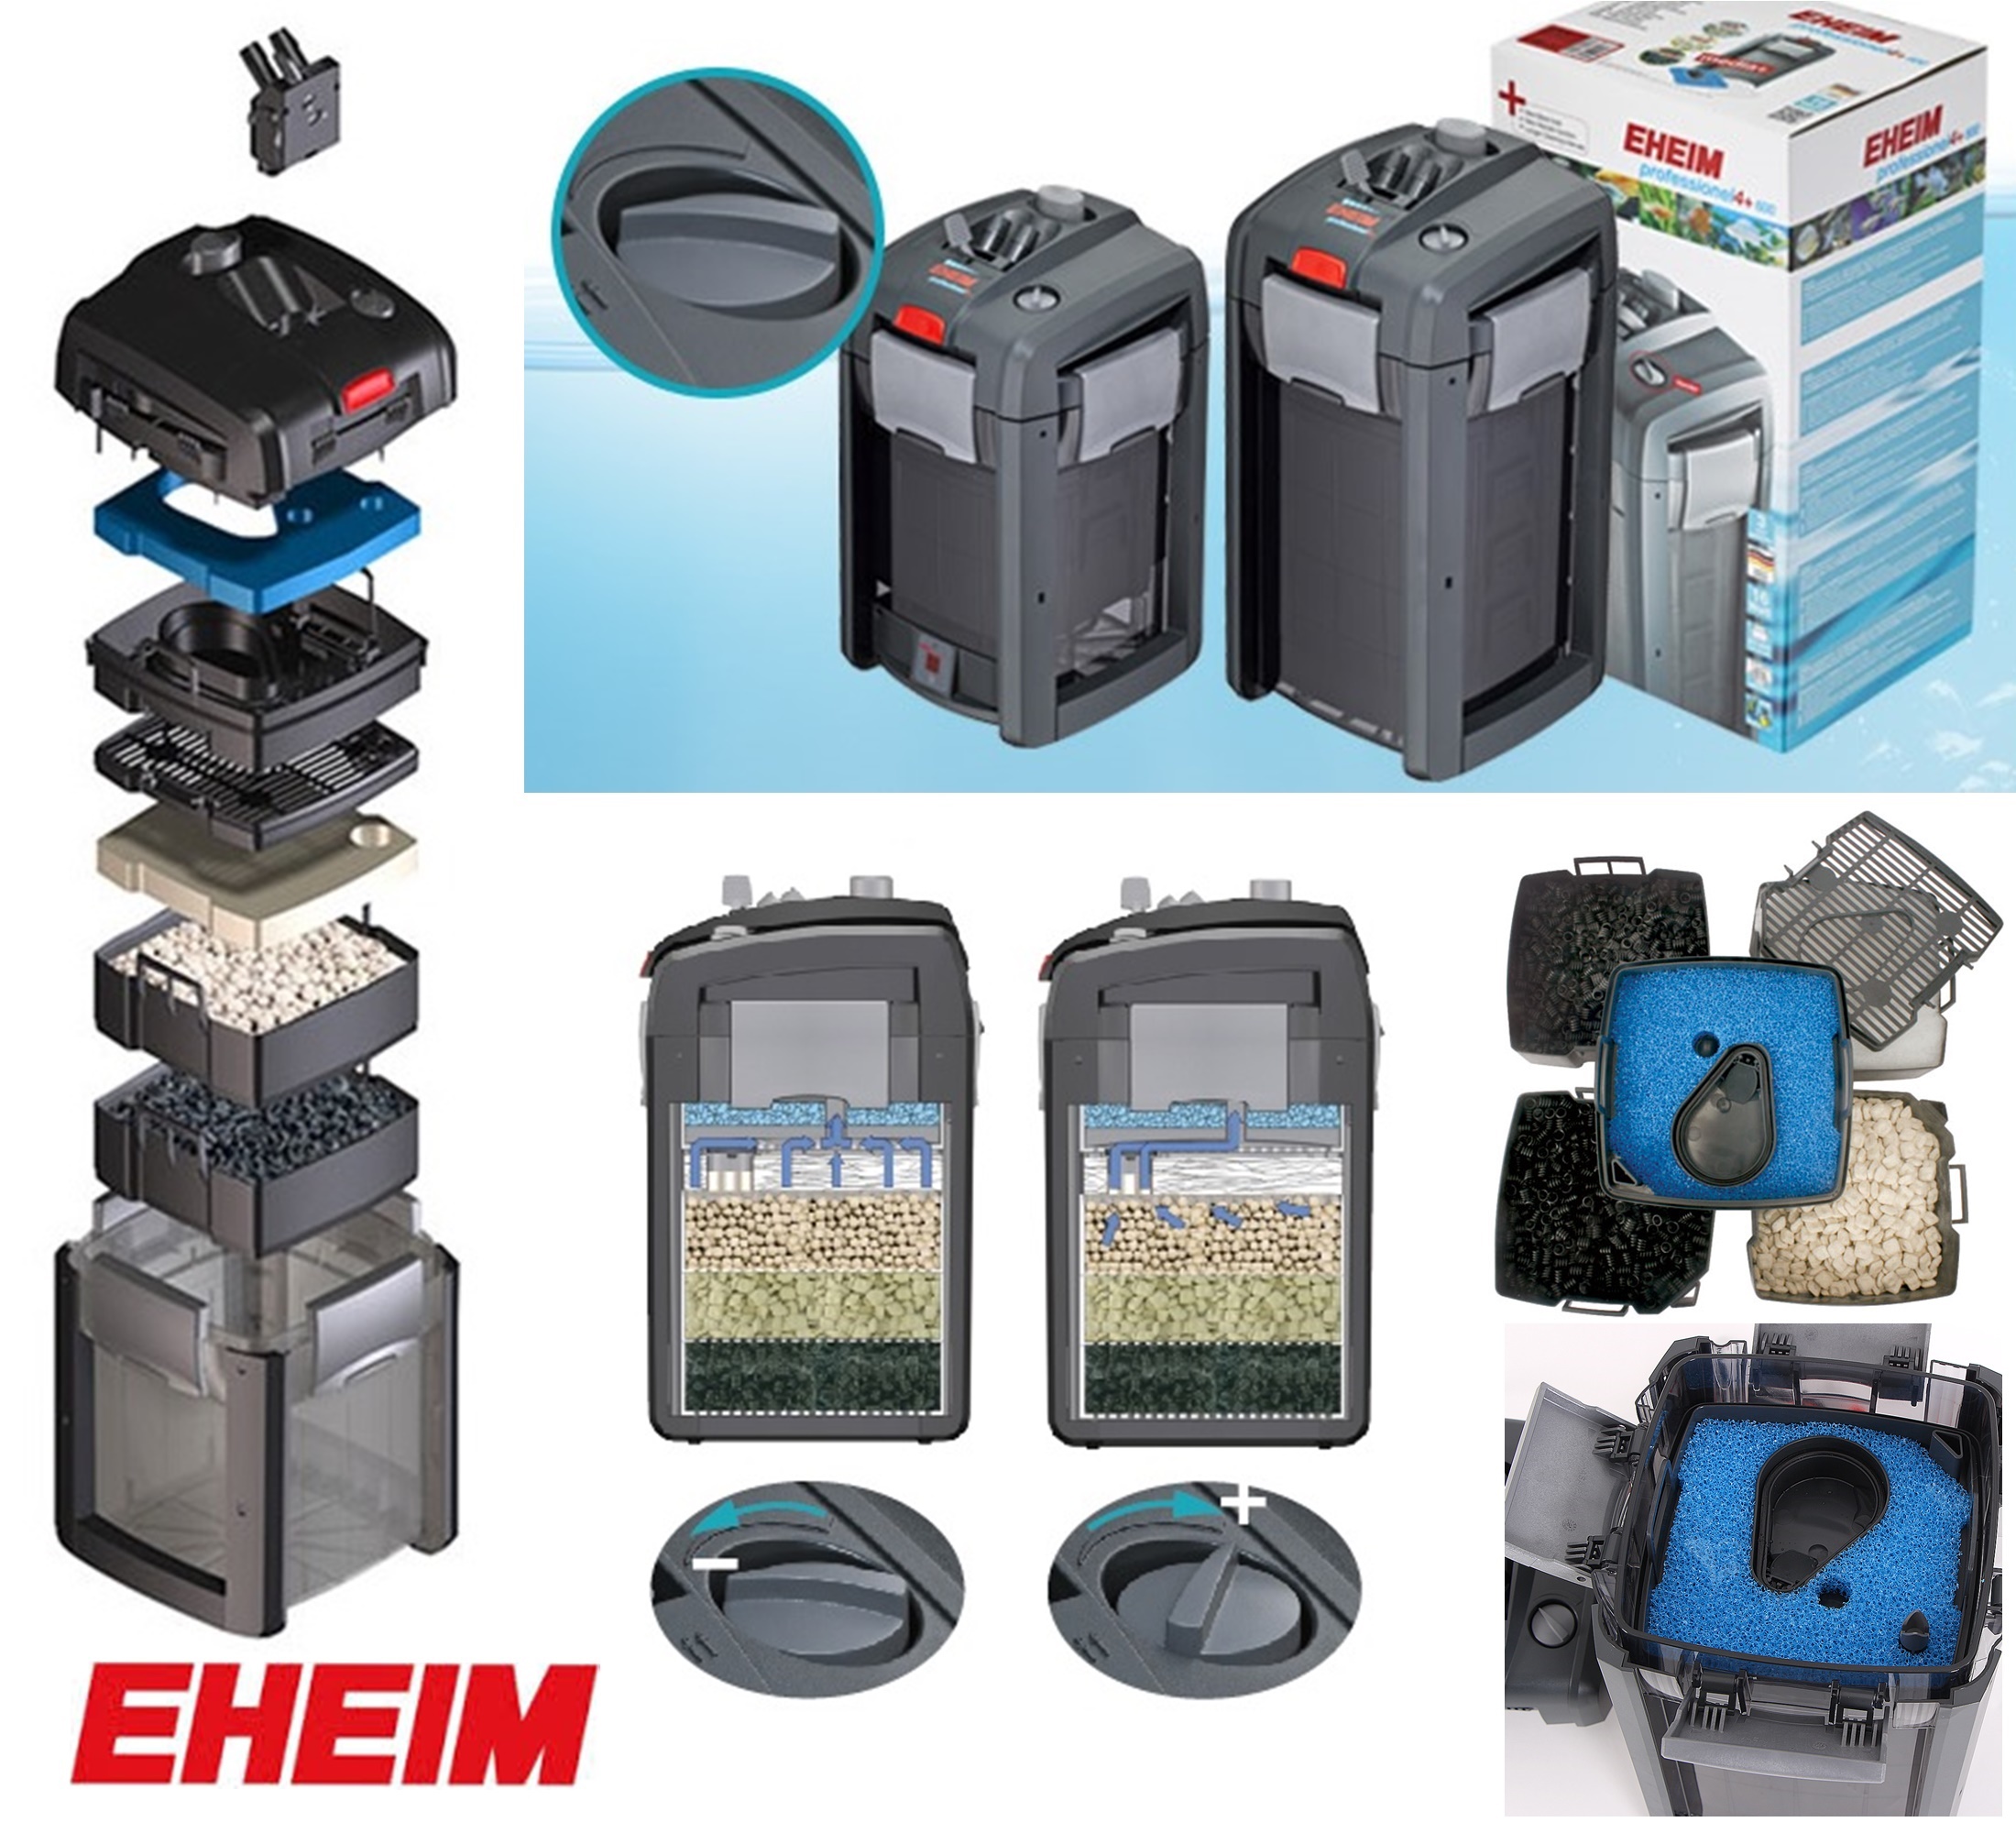 Filtr EHEIM professionel 4+ 250 2271 + wyposażenie i wkład